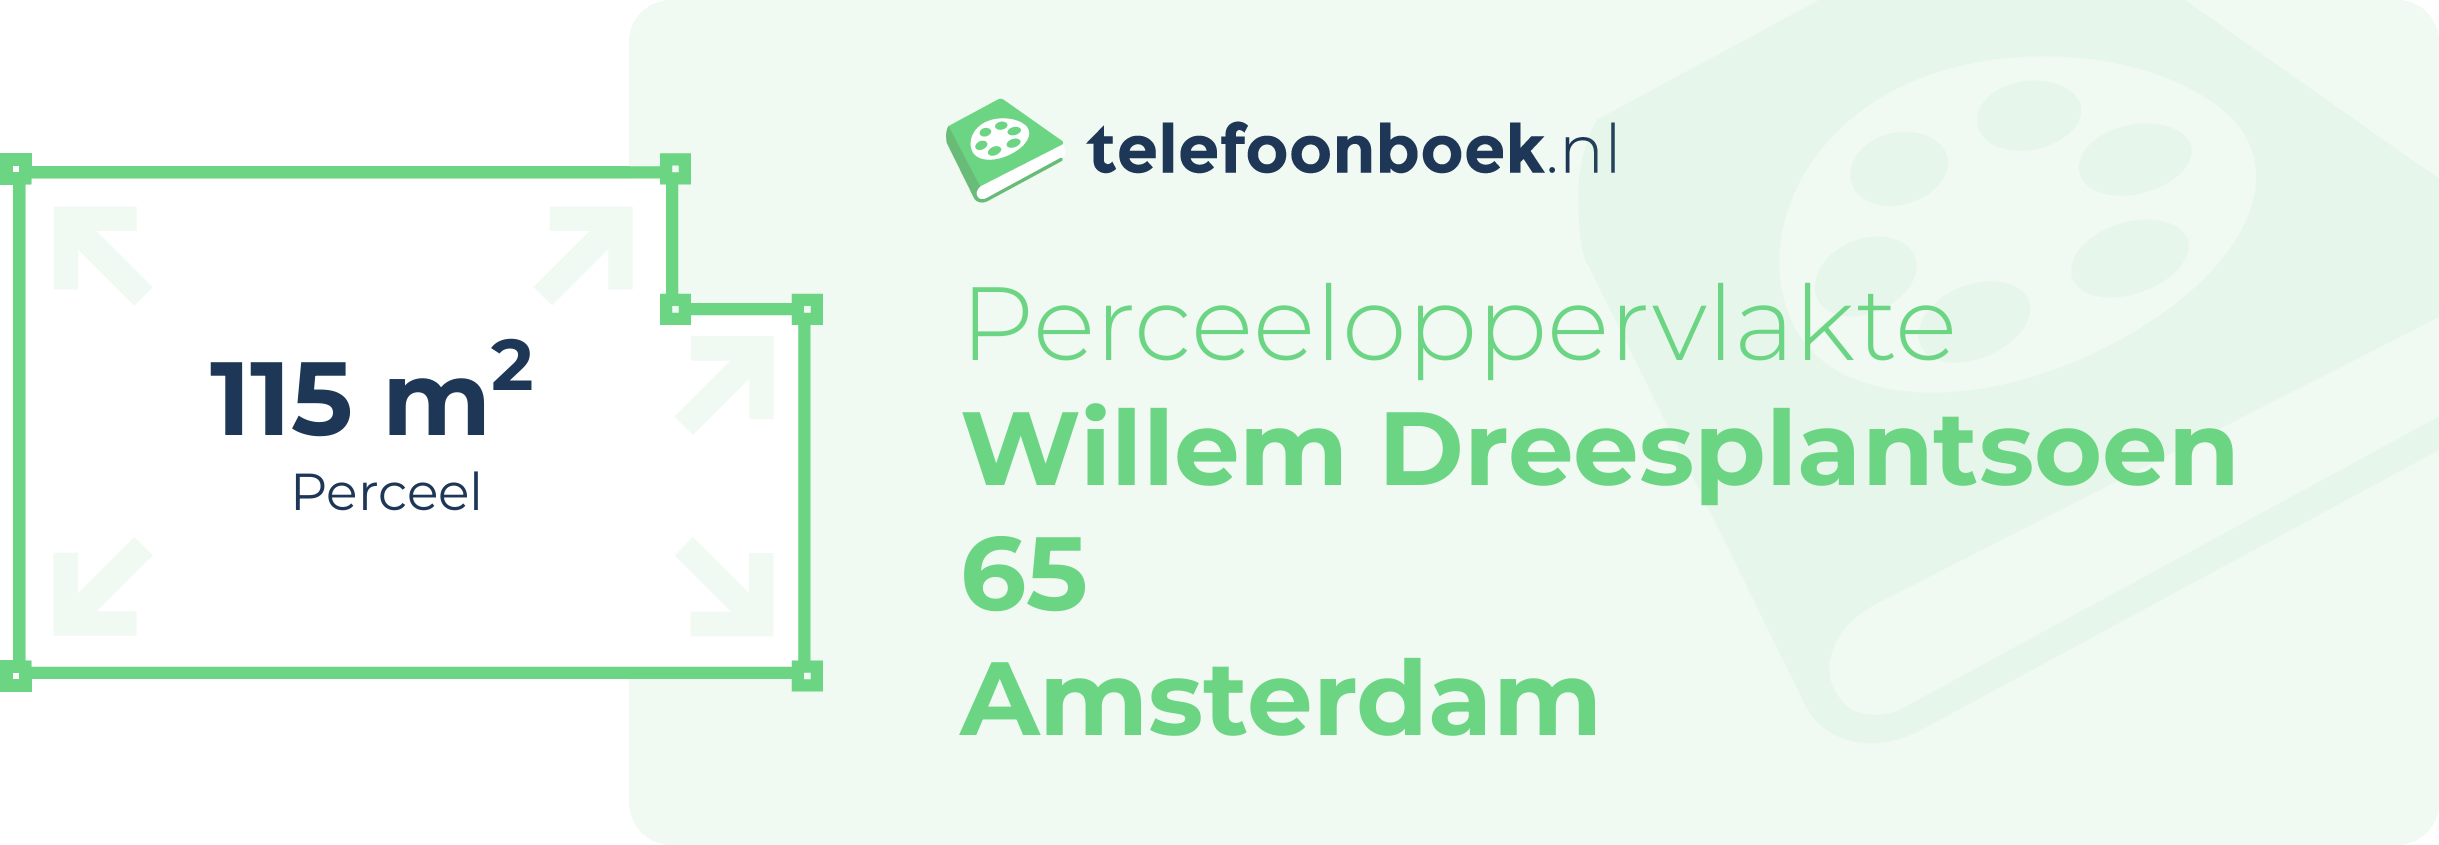 Perceeloppervlakte Willem Dreesplantsoen 65 Amsterdam